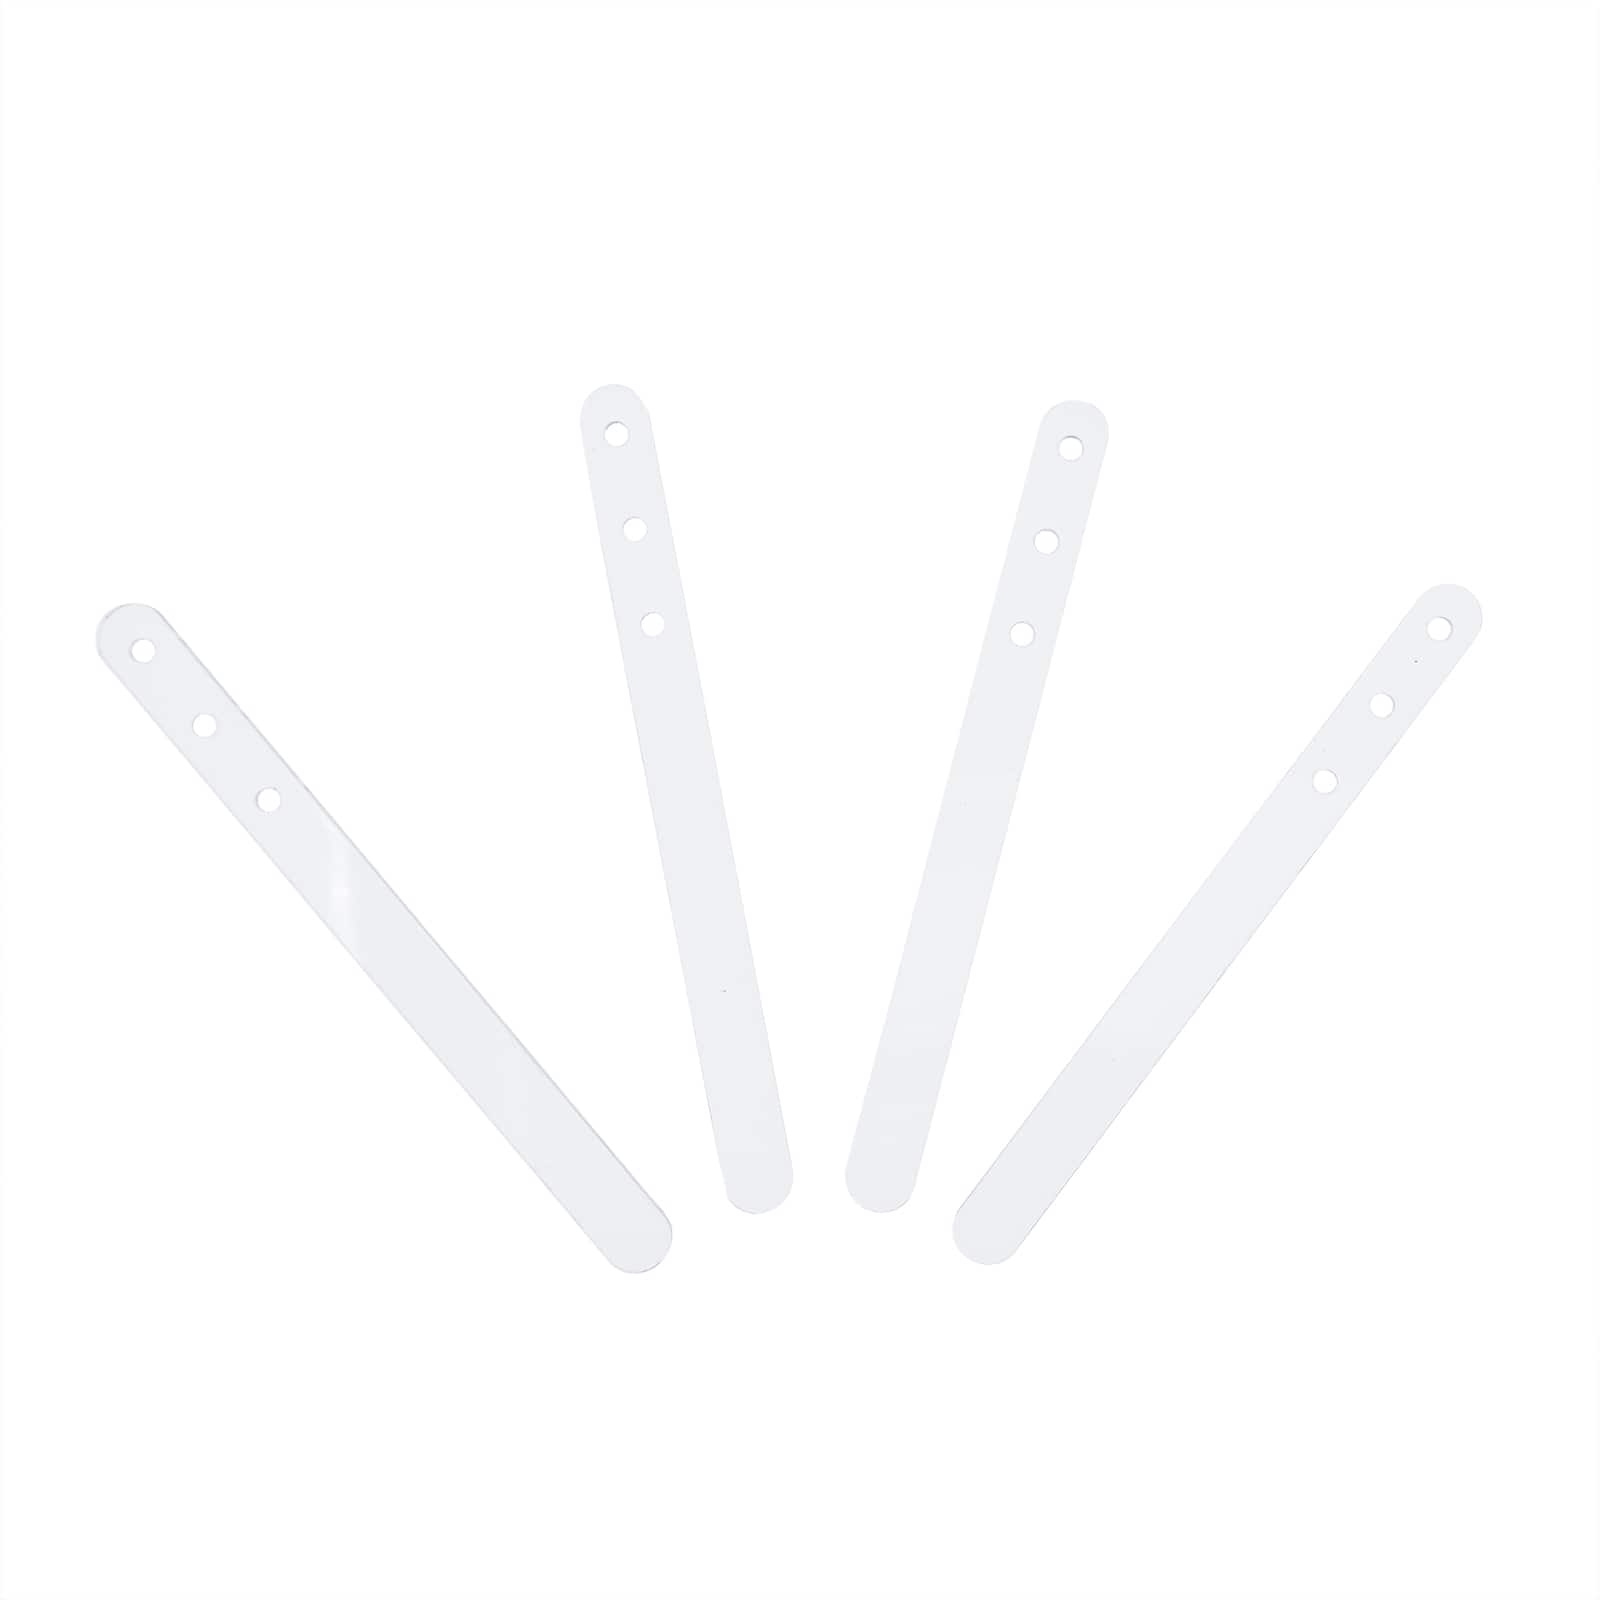 White Popsicle Sticks: Acrylic Cakesicle Sticks